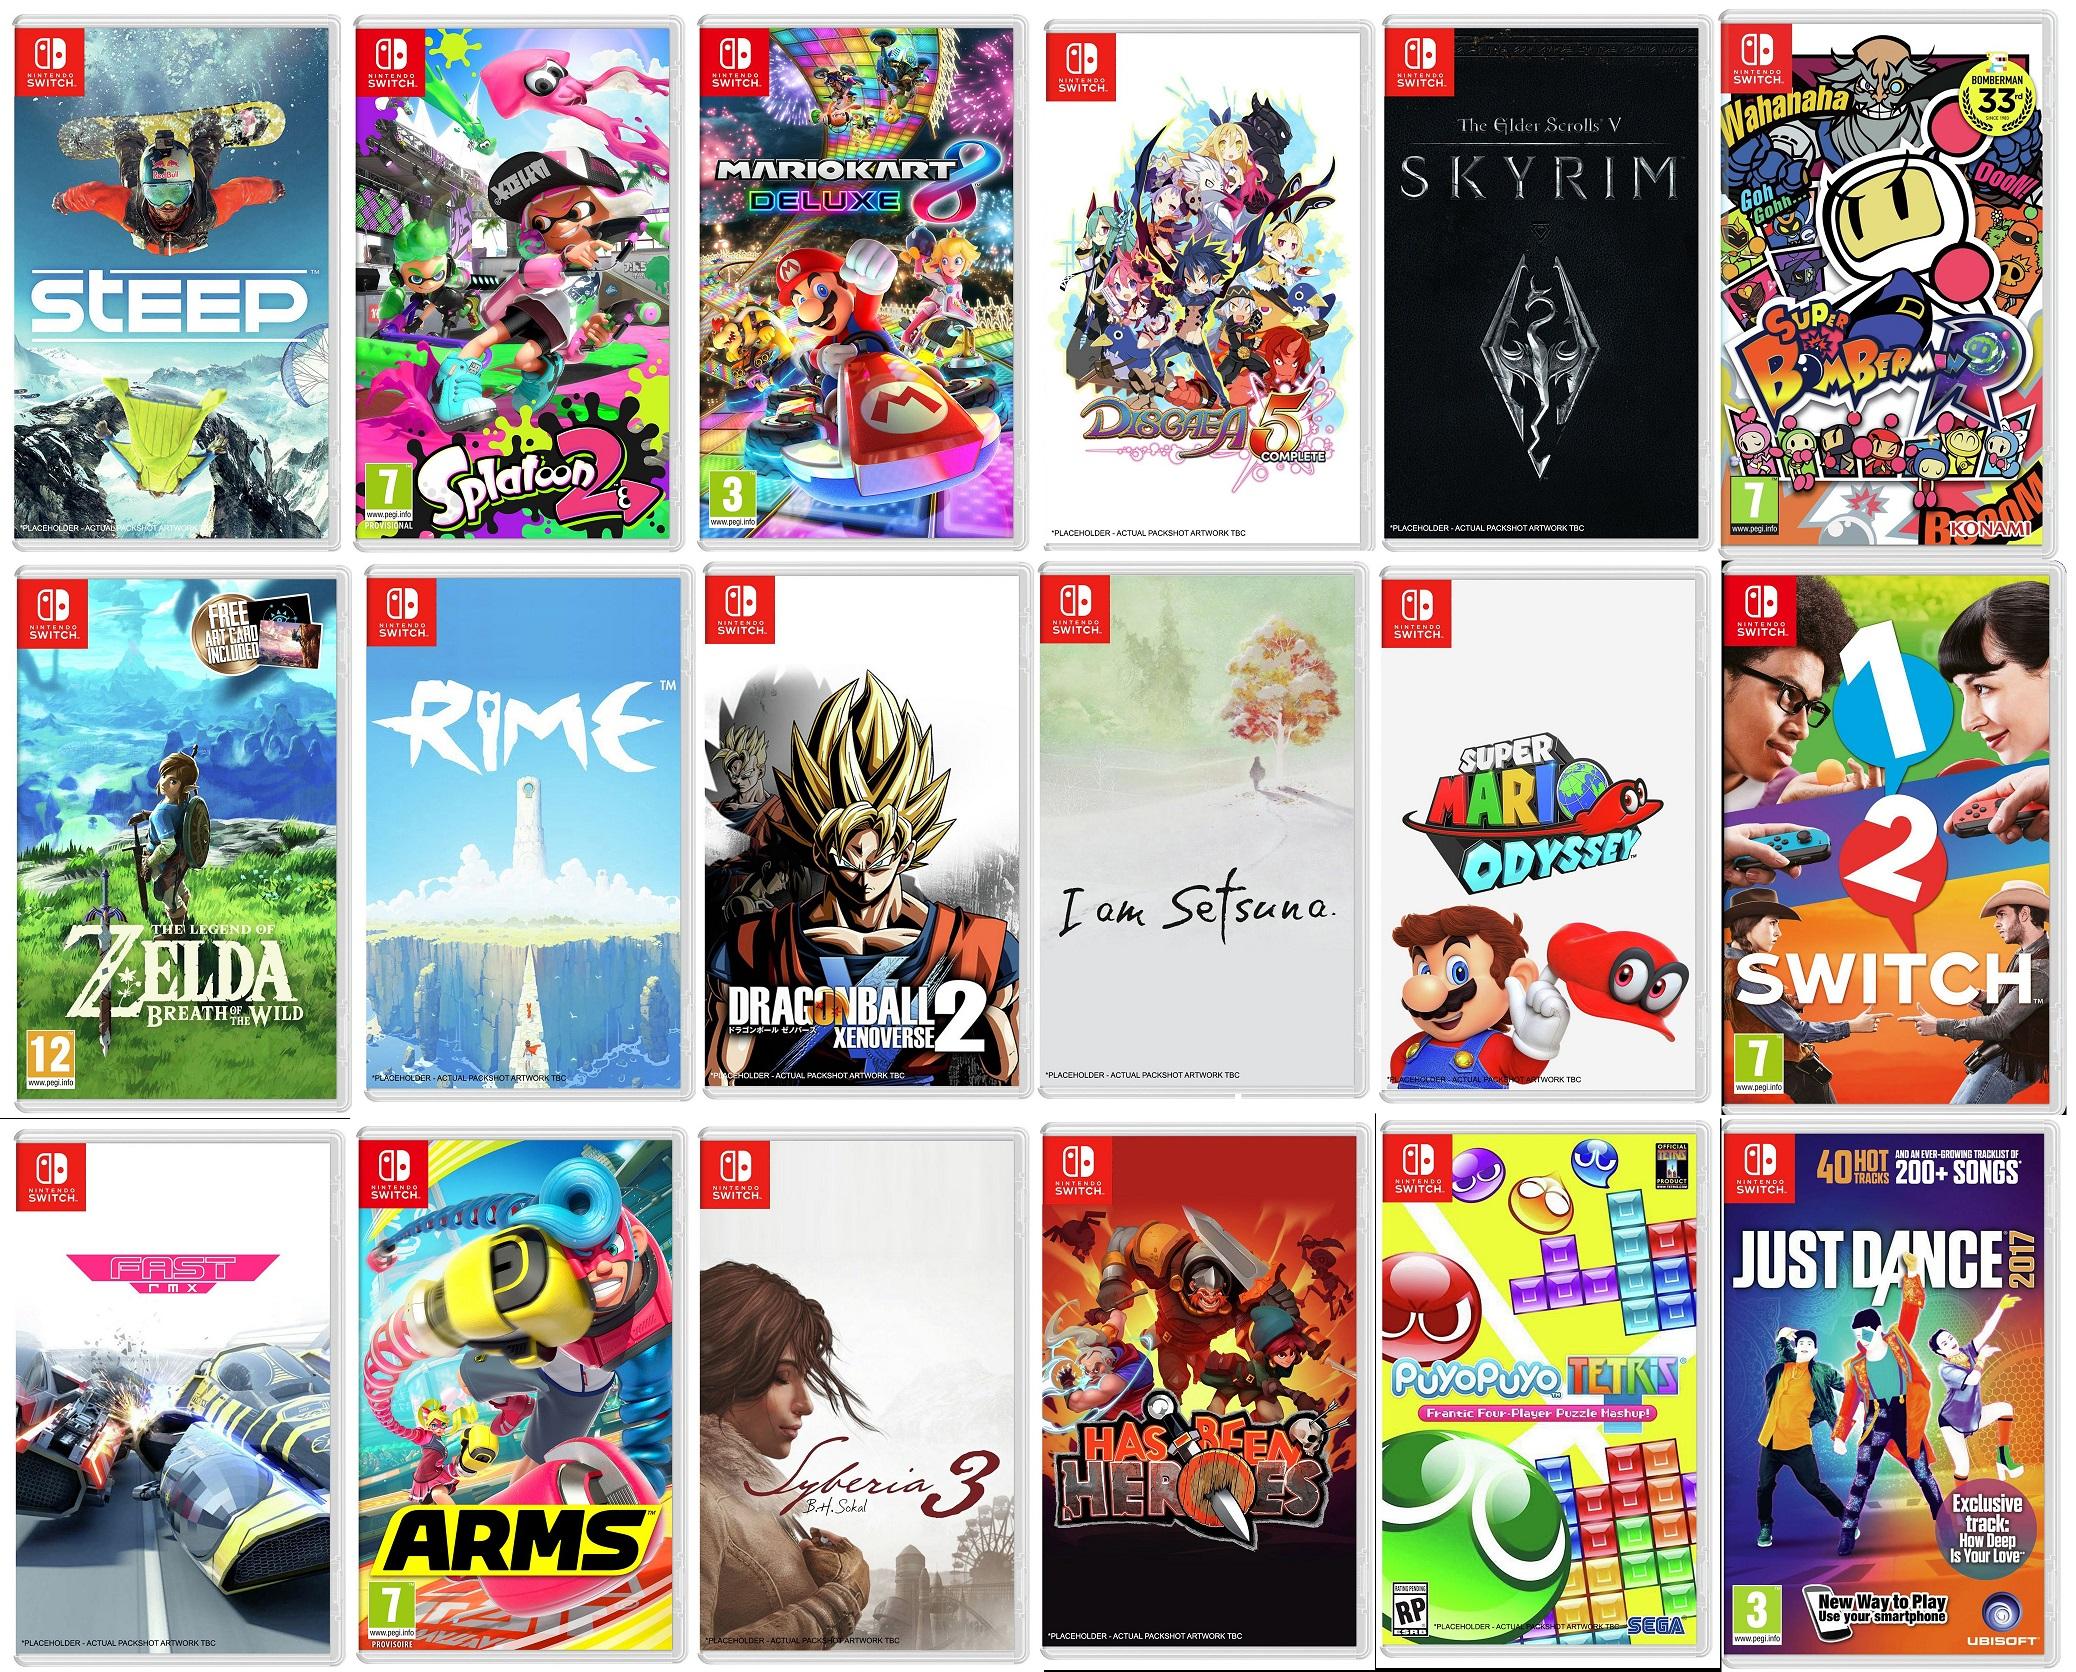 Nintendo UK Introducing the top 50 Nintendo Switch games so far, as